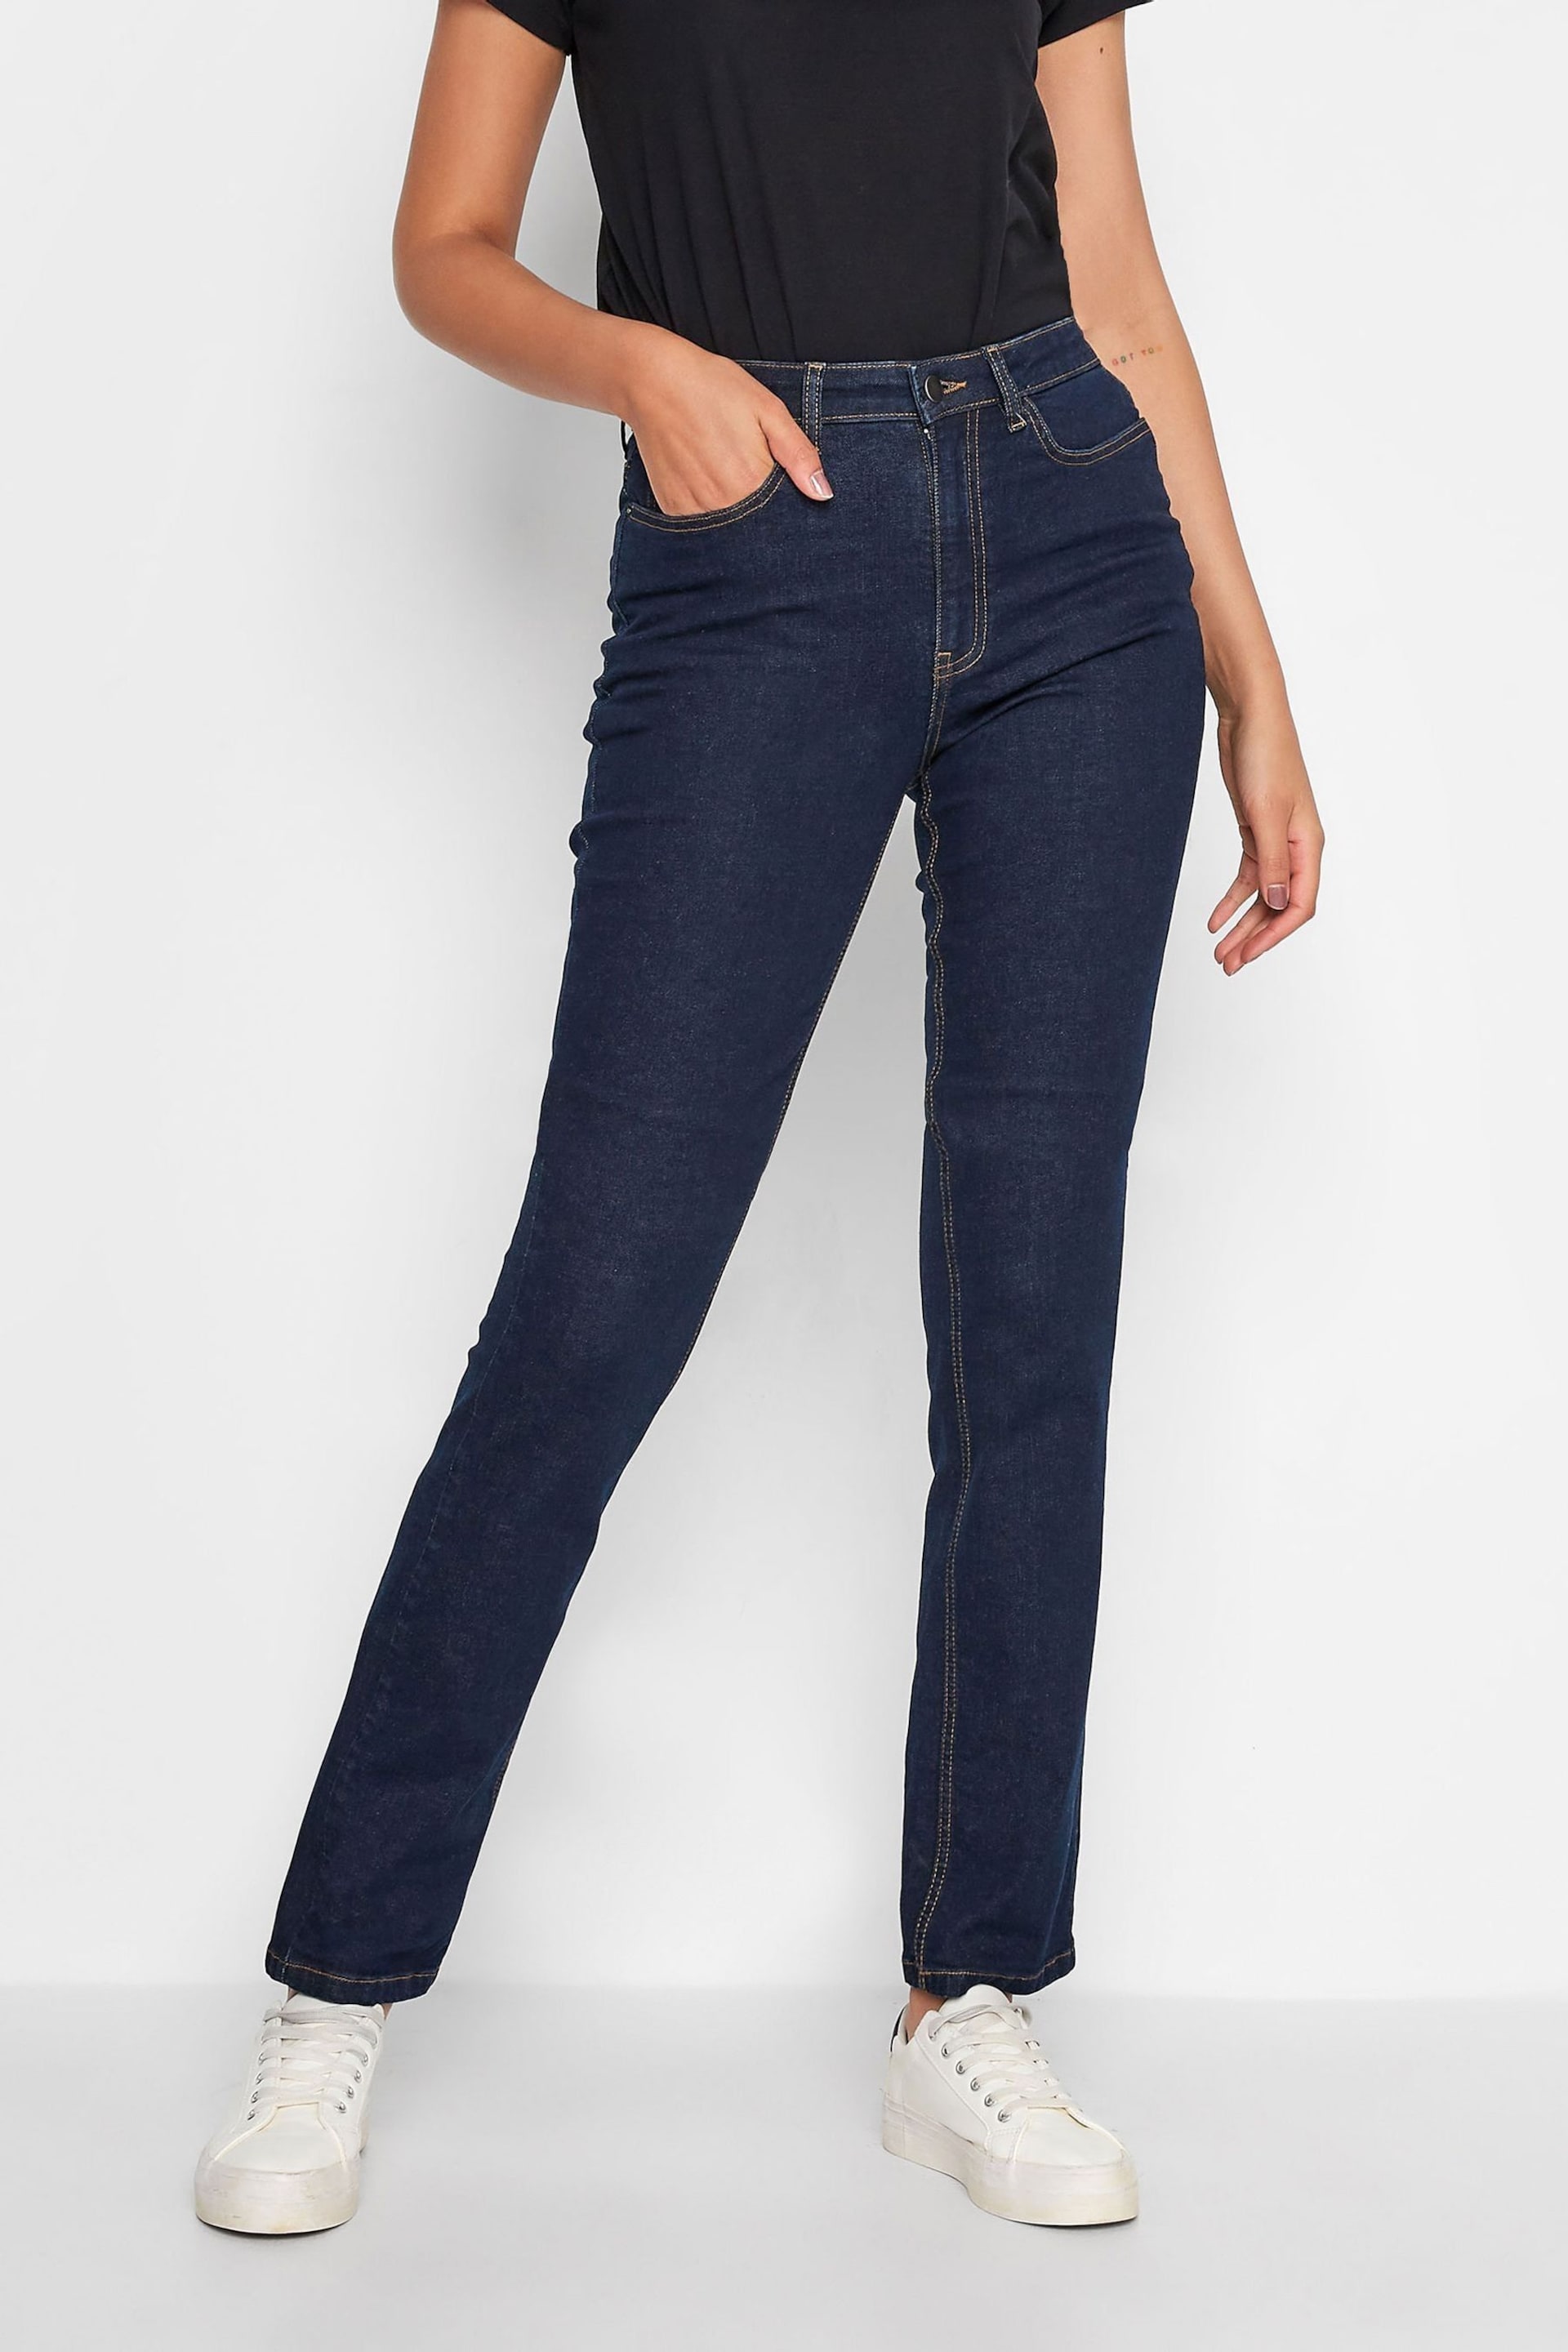 Long Tall Sally Blue Mia Slim Leg Jeans - Image 1 of 4